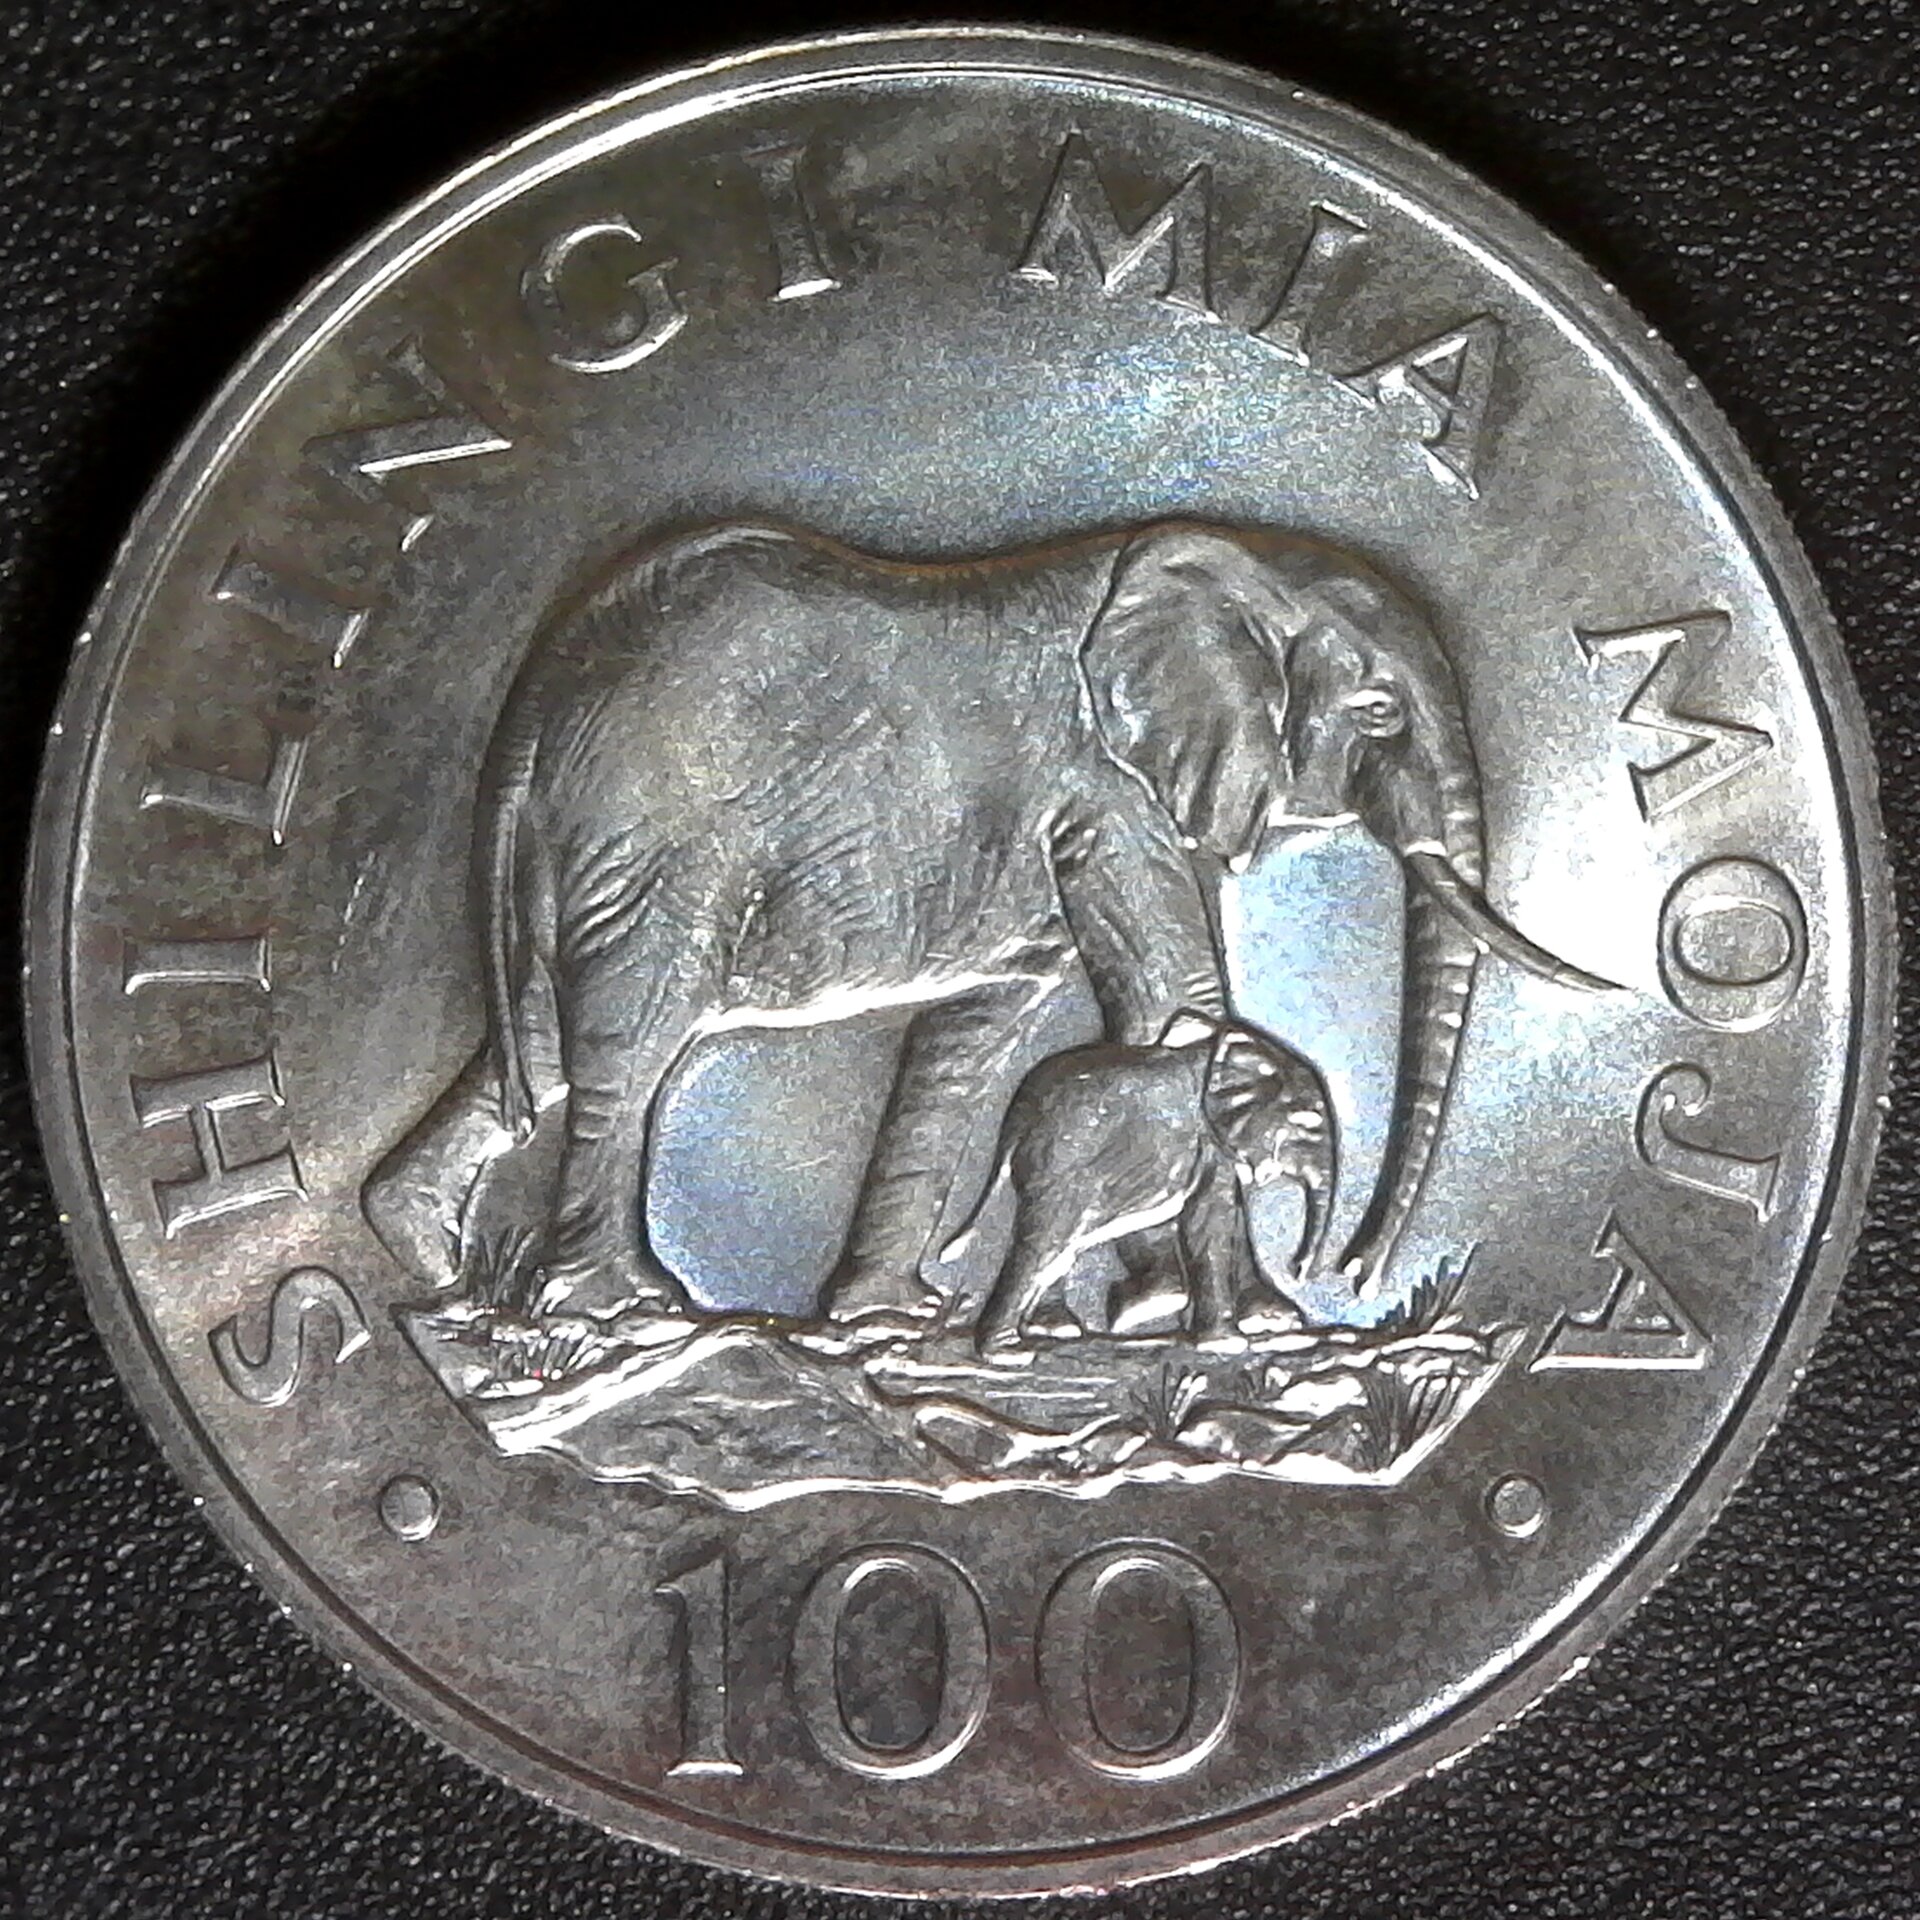 Tanzania 100 Shillings 1986 rev B.jpg